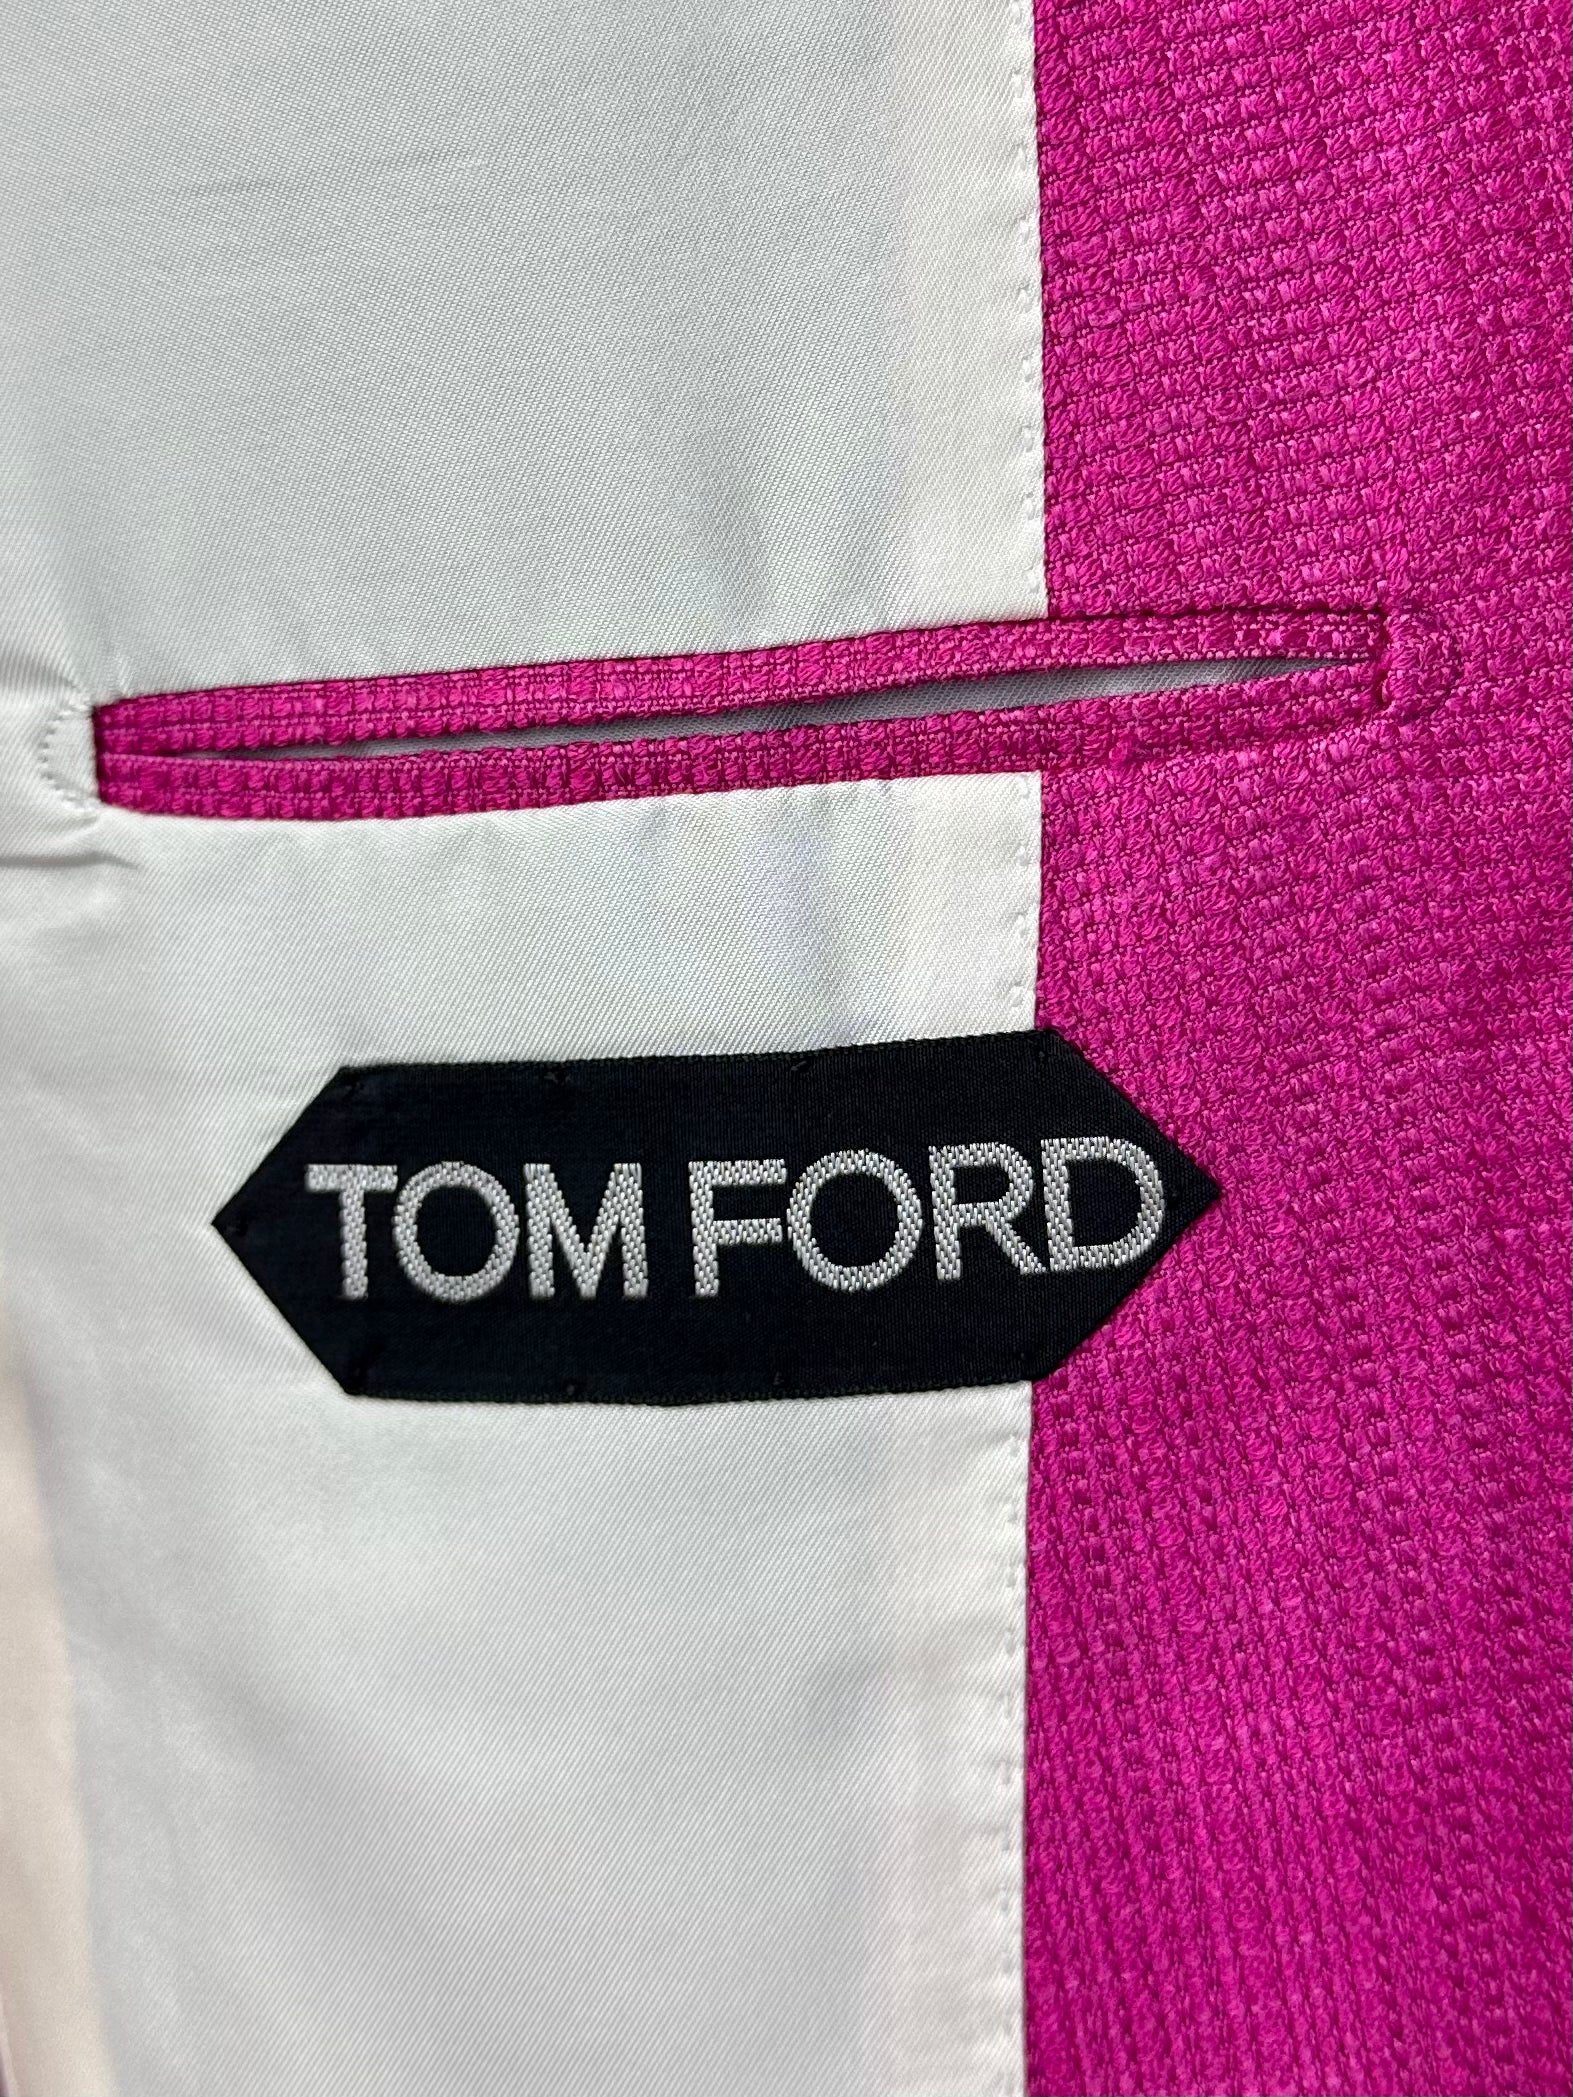 Tom Ford roze zijdemix pak